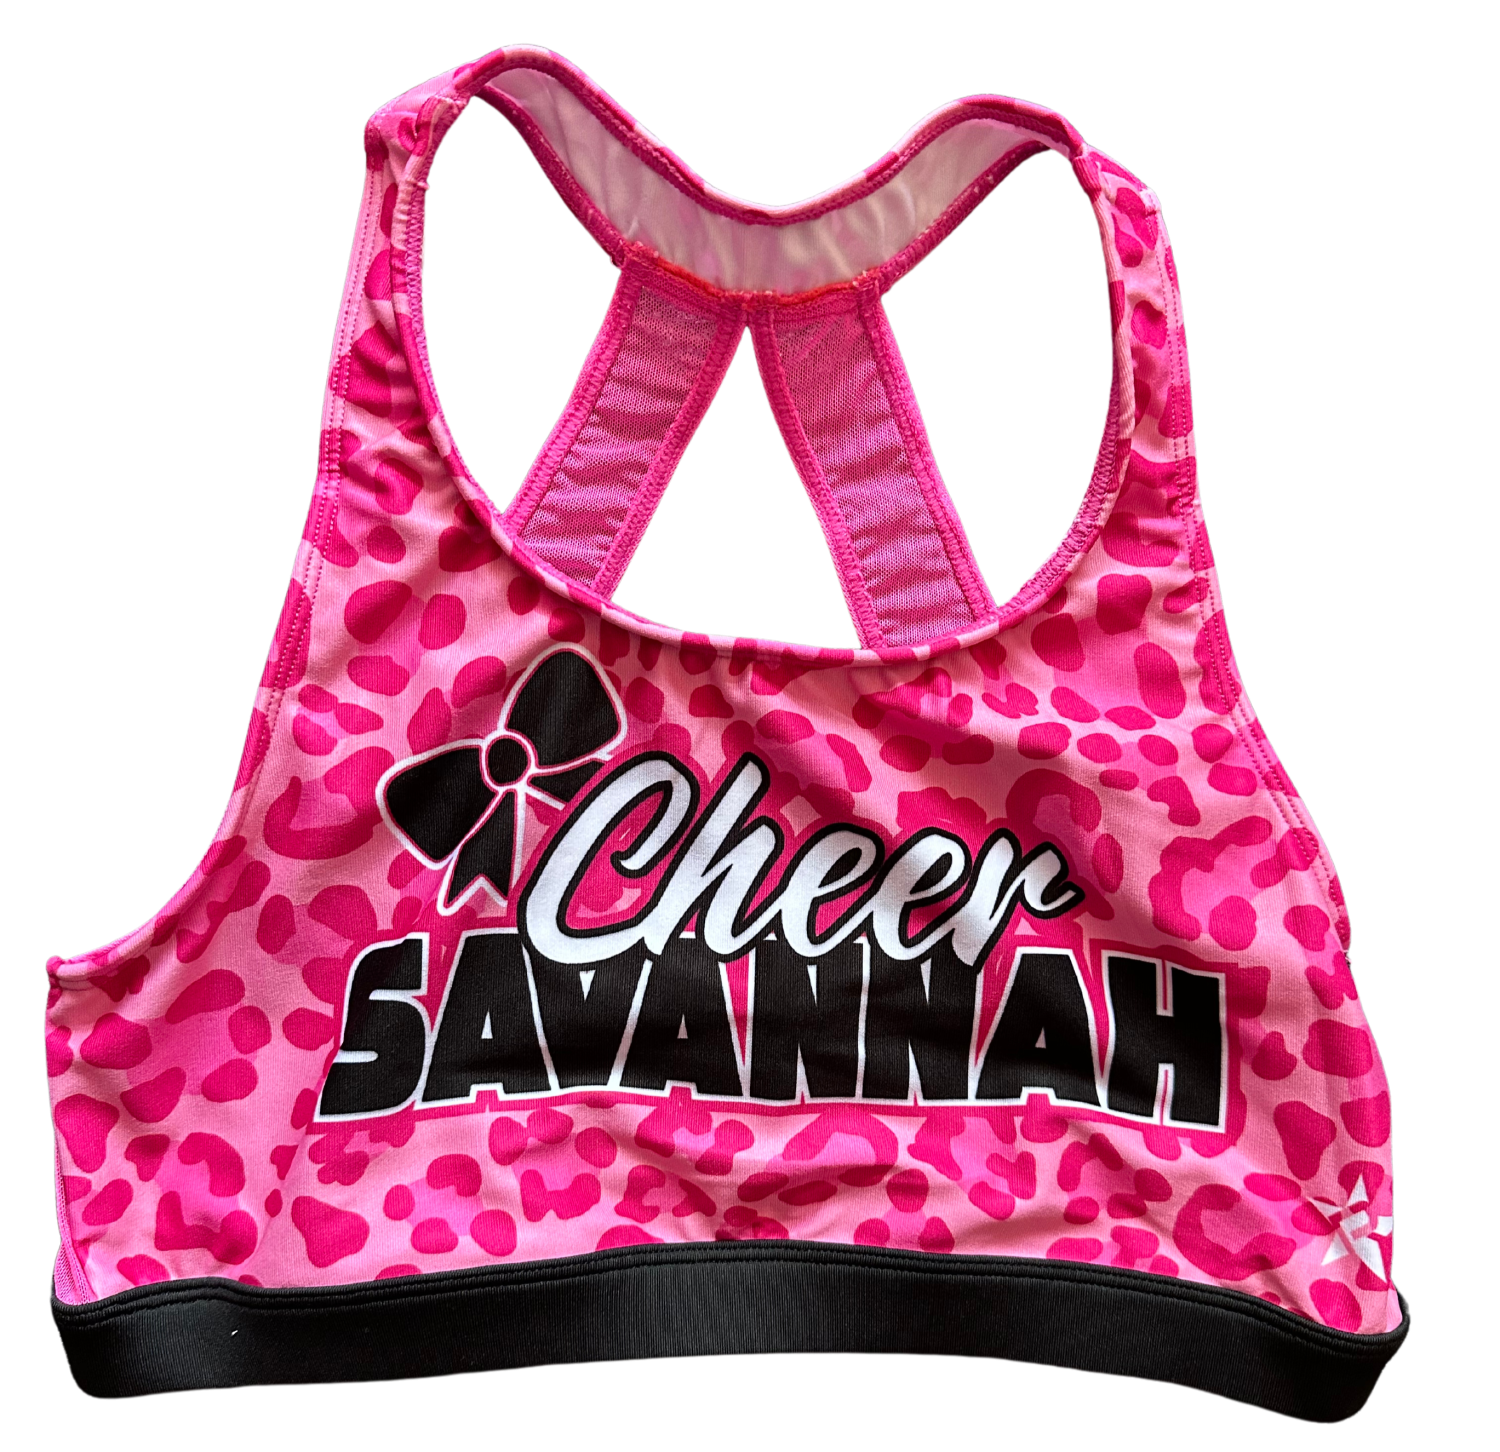 Cheer Savannah CSA PRO SHOP > Practice Wear - Pink Leopard Cheer Savannah  Sports Bra